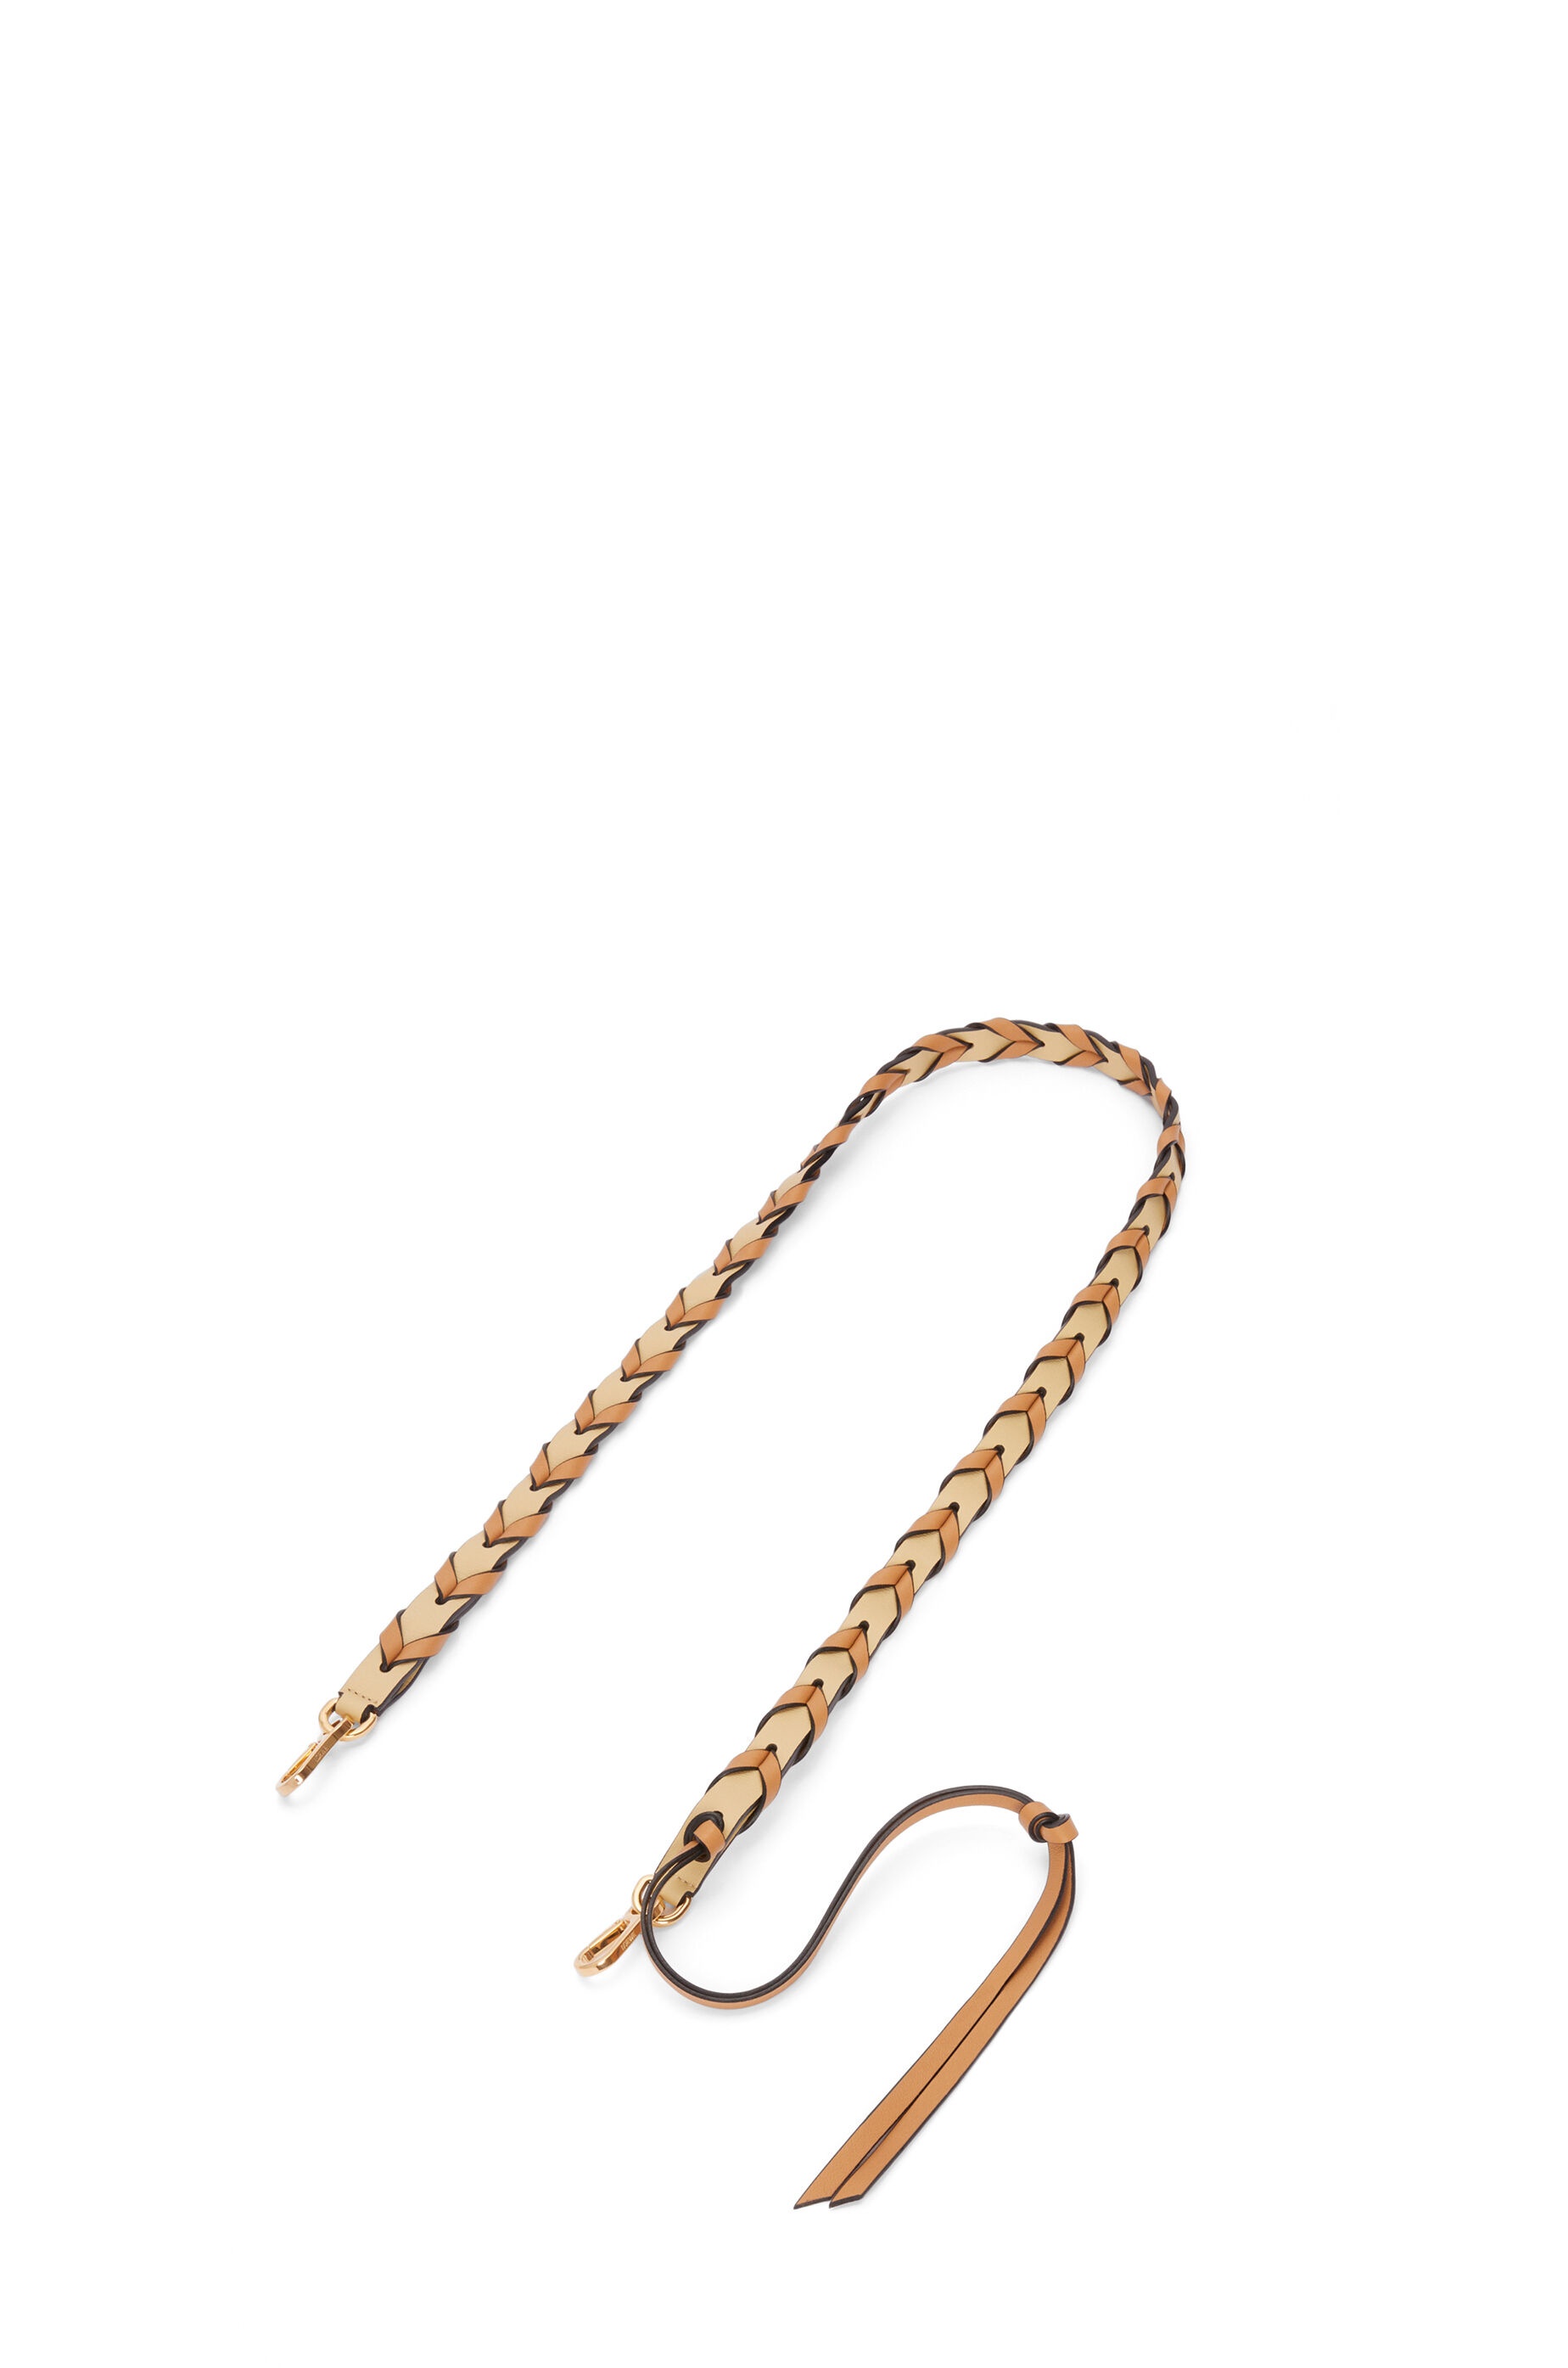 Thin braided strap in classic calfskin - 1